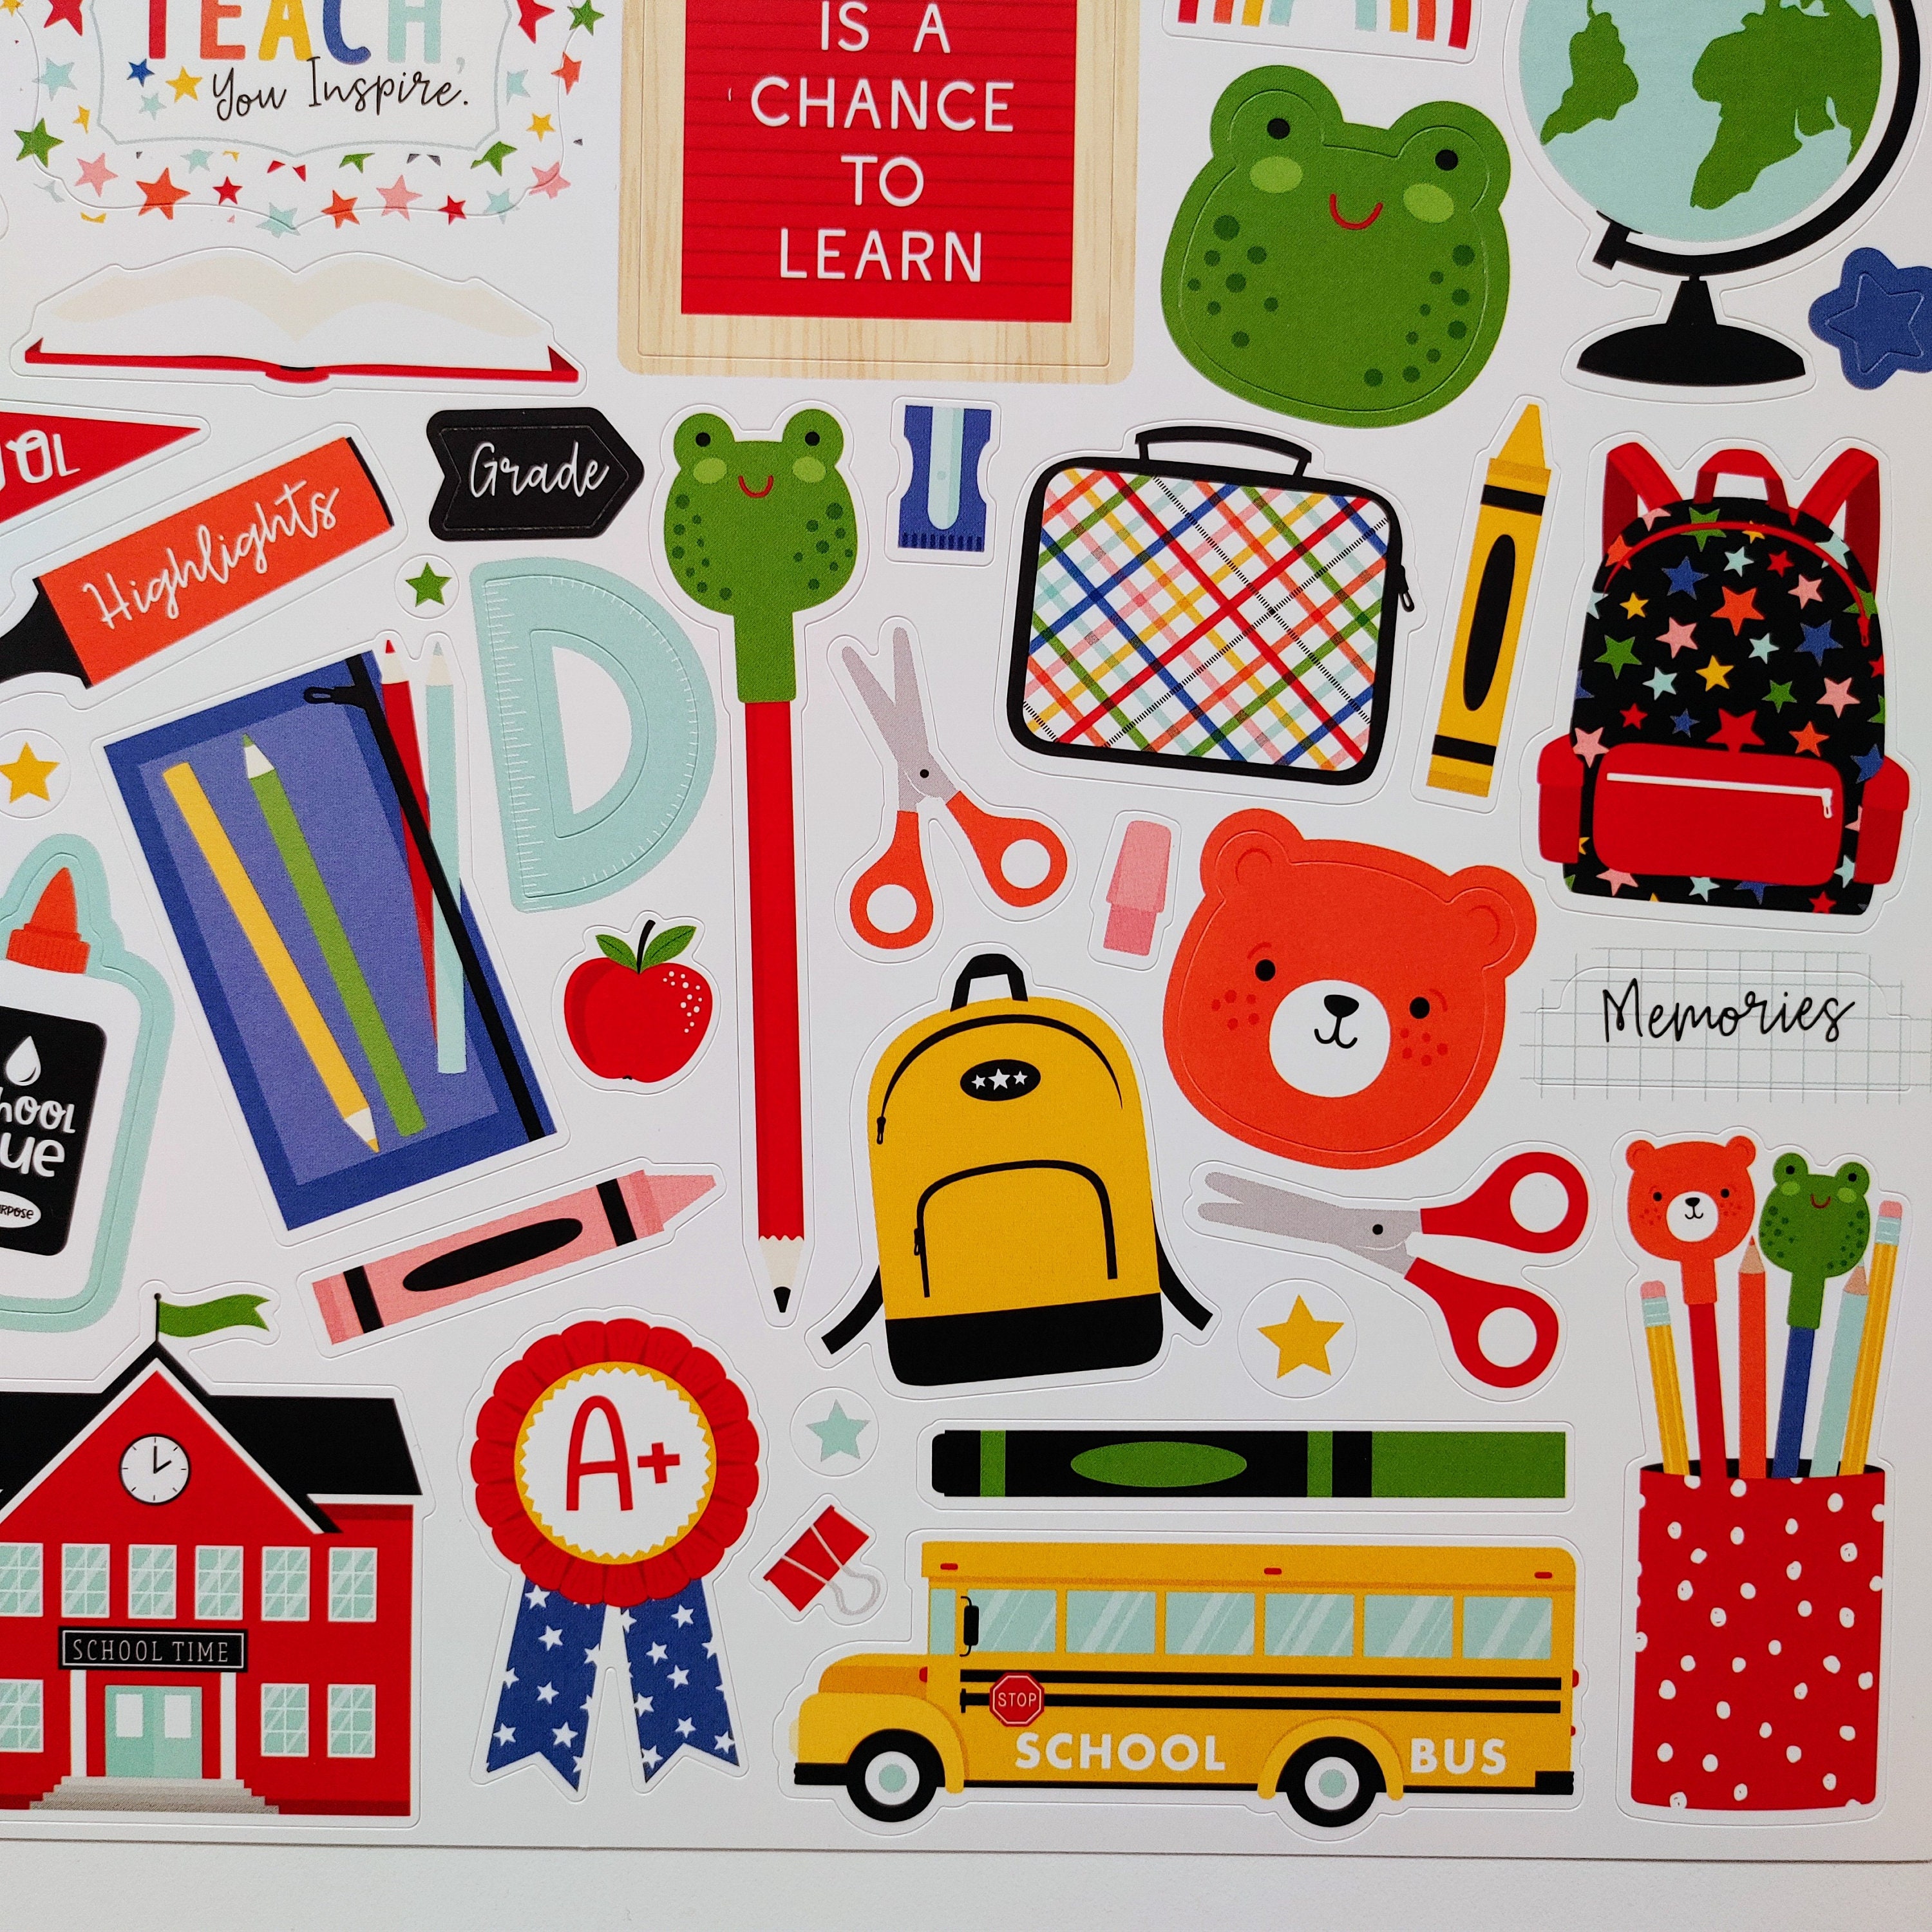 I LOVE TEA Kit 12X12 Scrapbook Paper Stickers 3pc – Scrapbooksrus